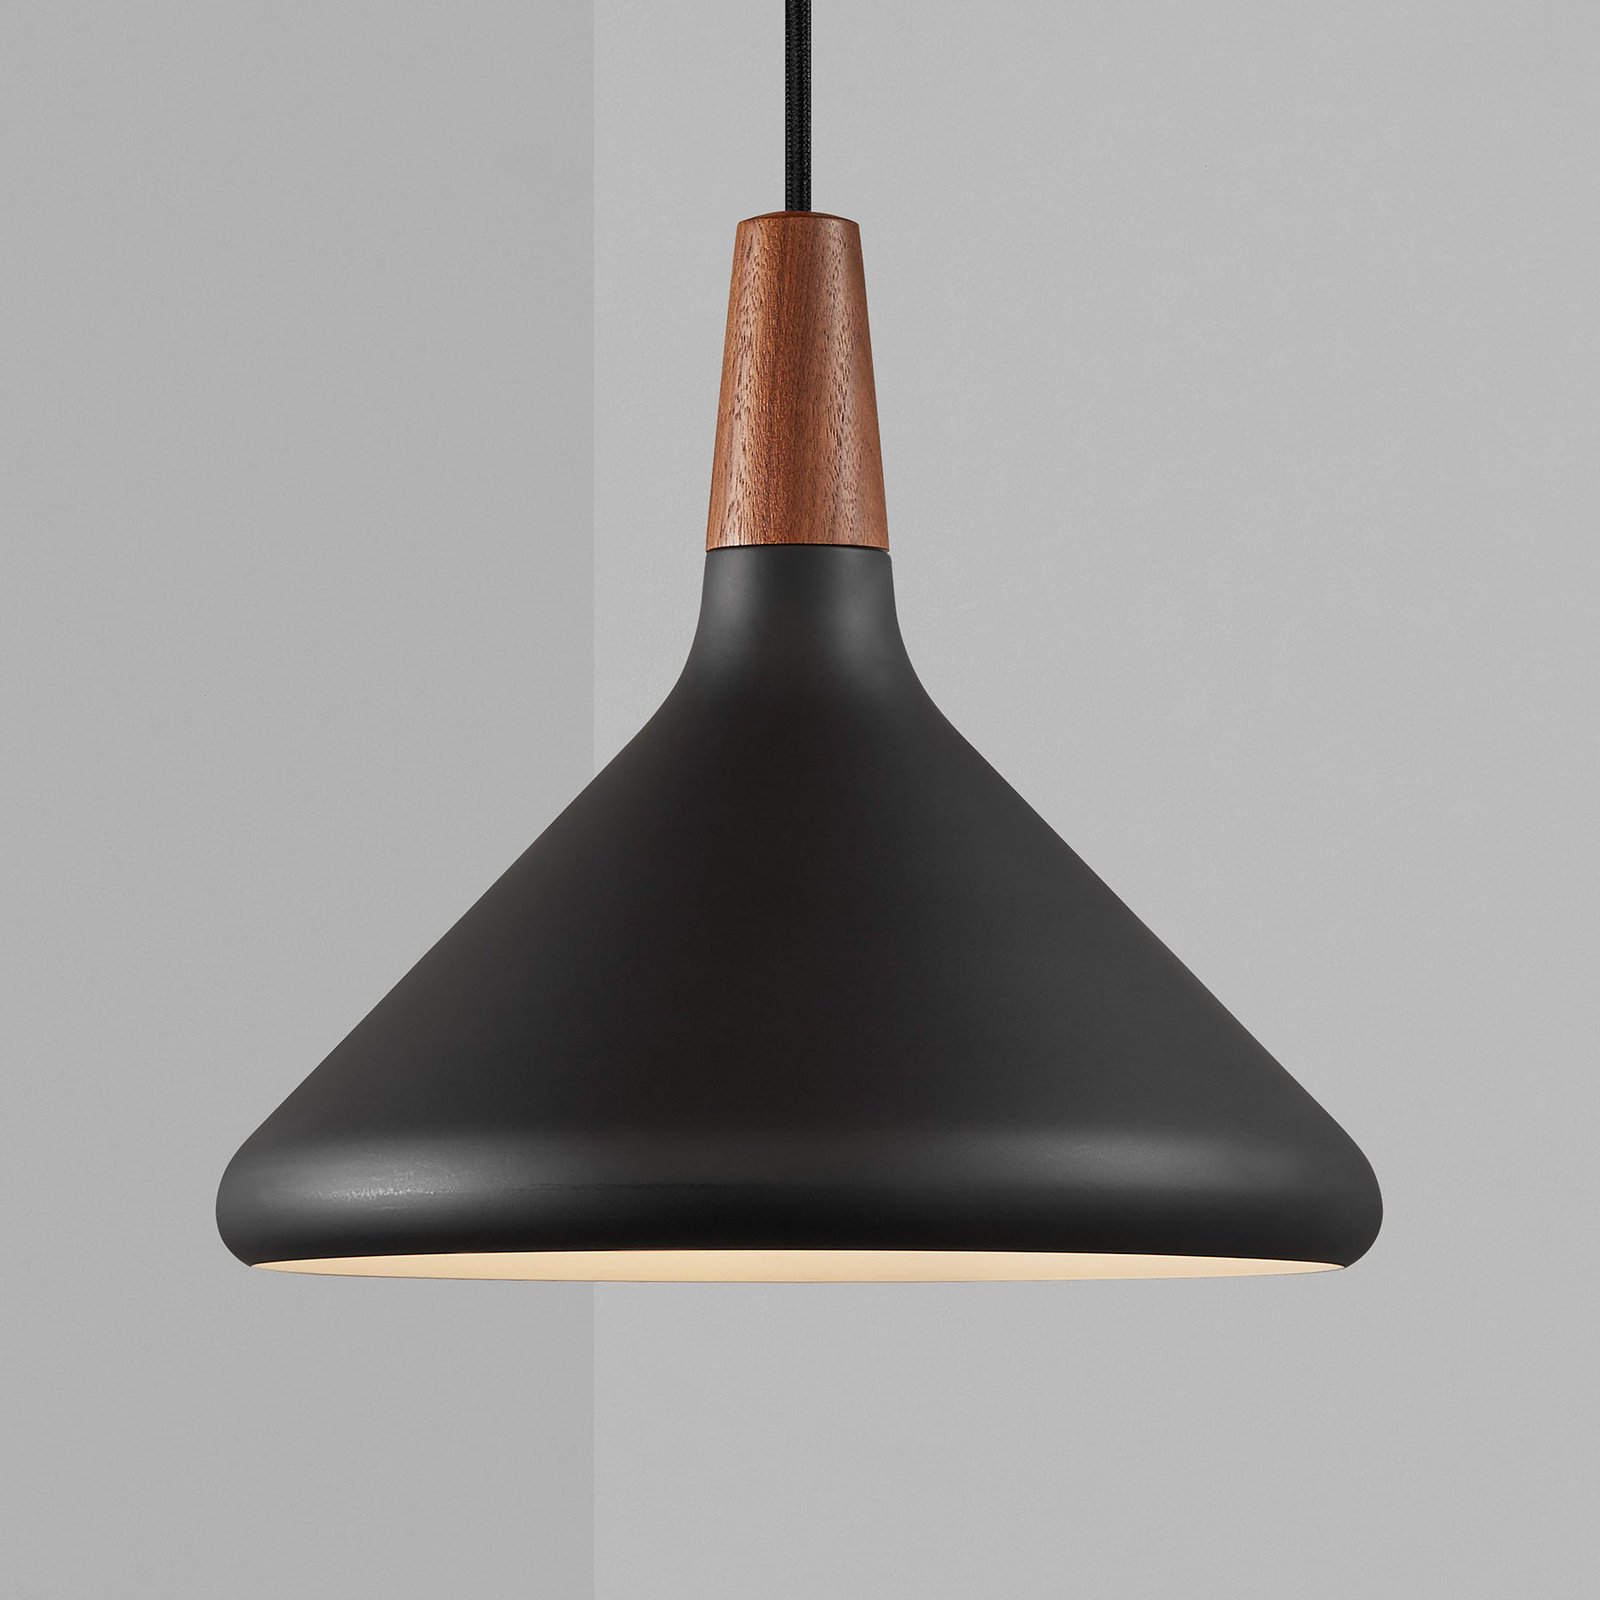 Nori hanglamp Ø 27 cm, zwart